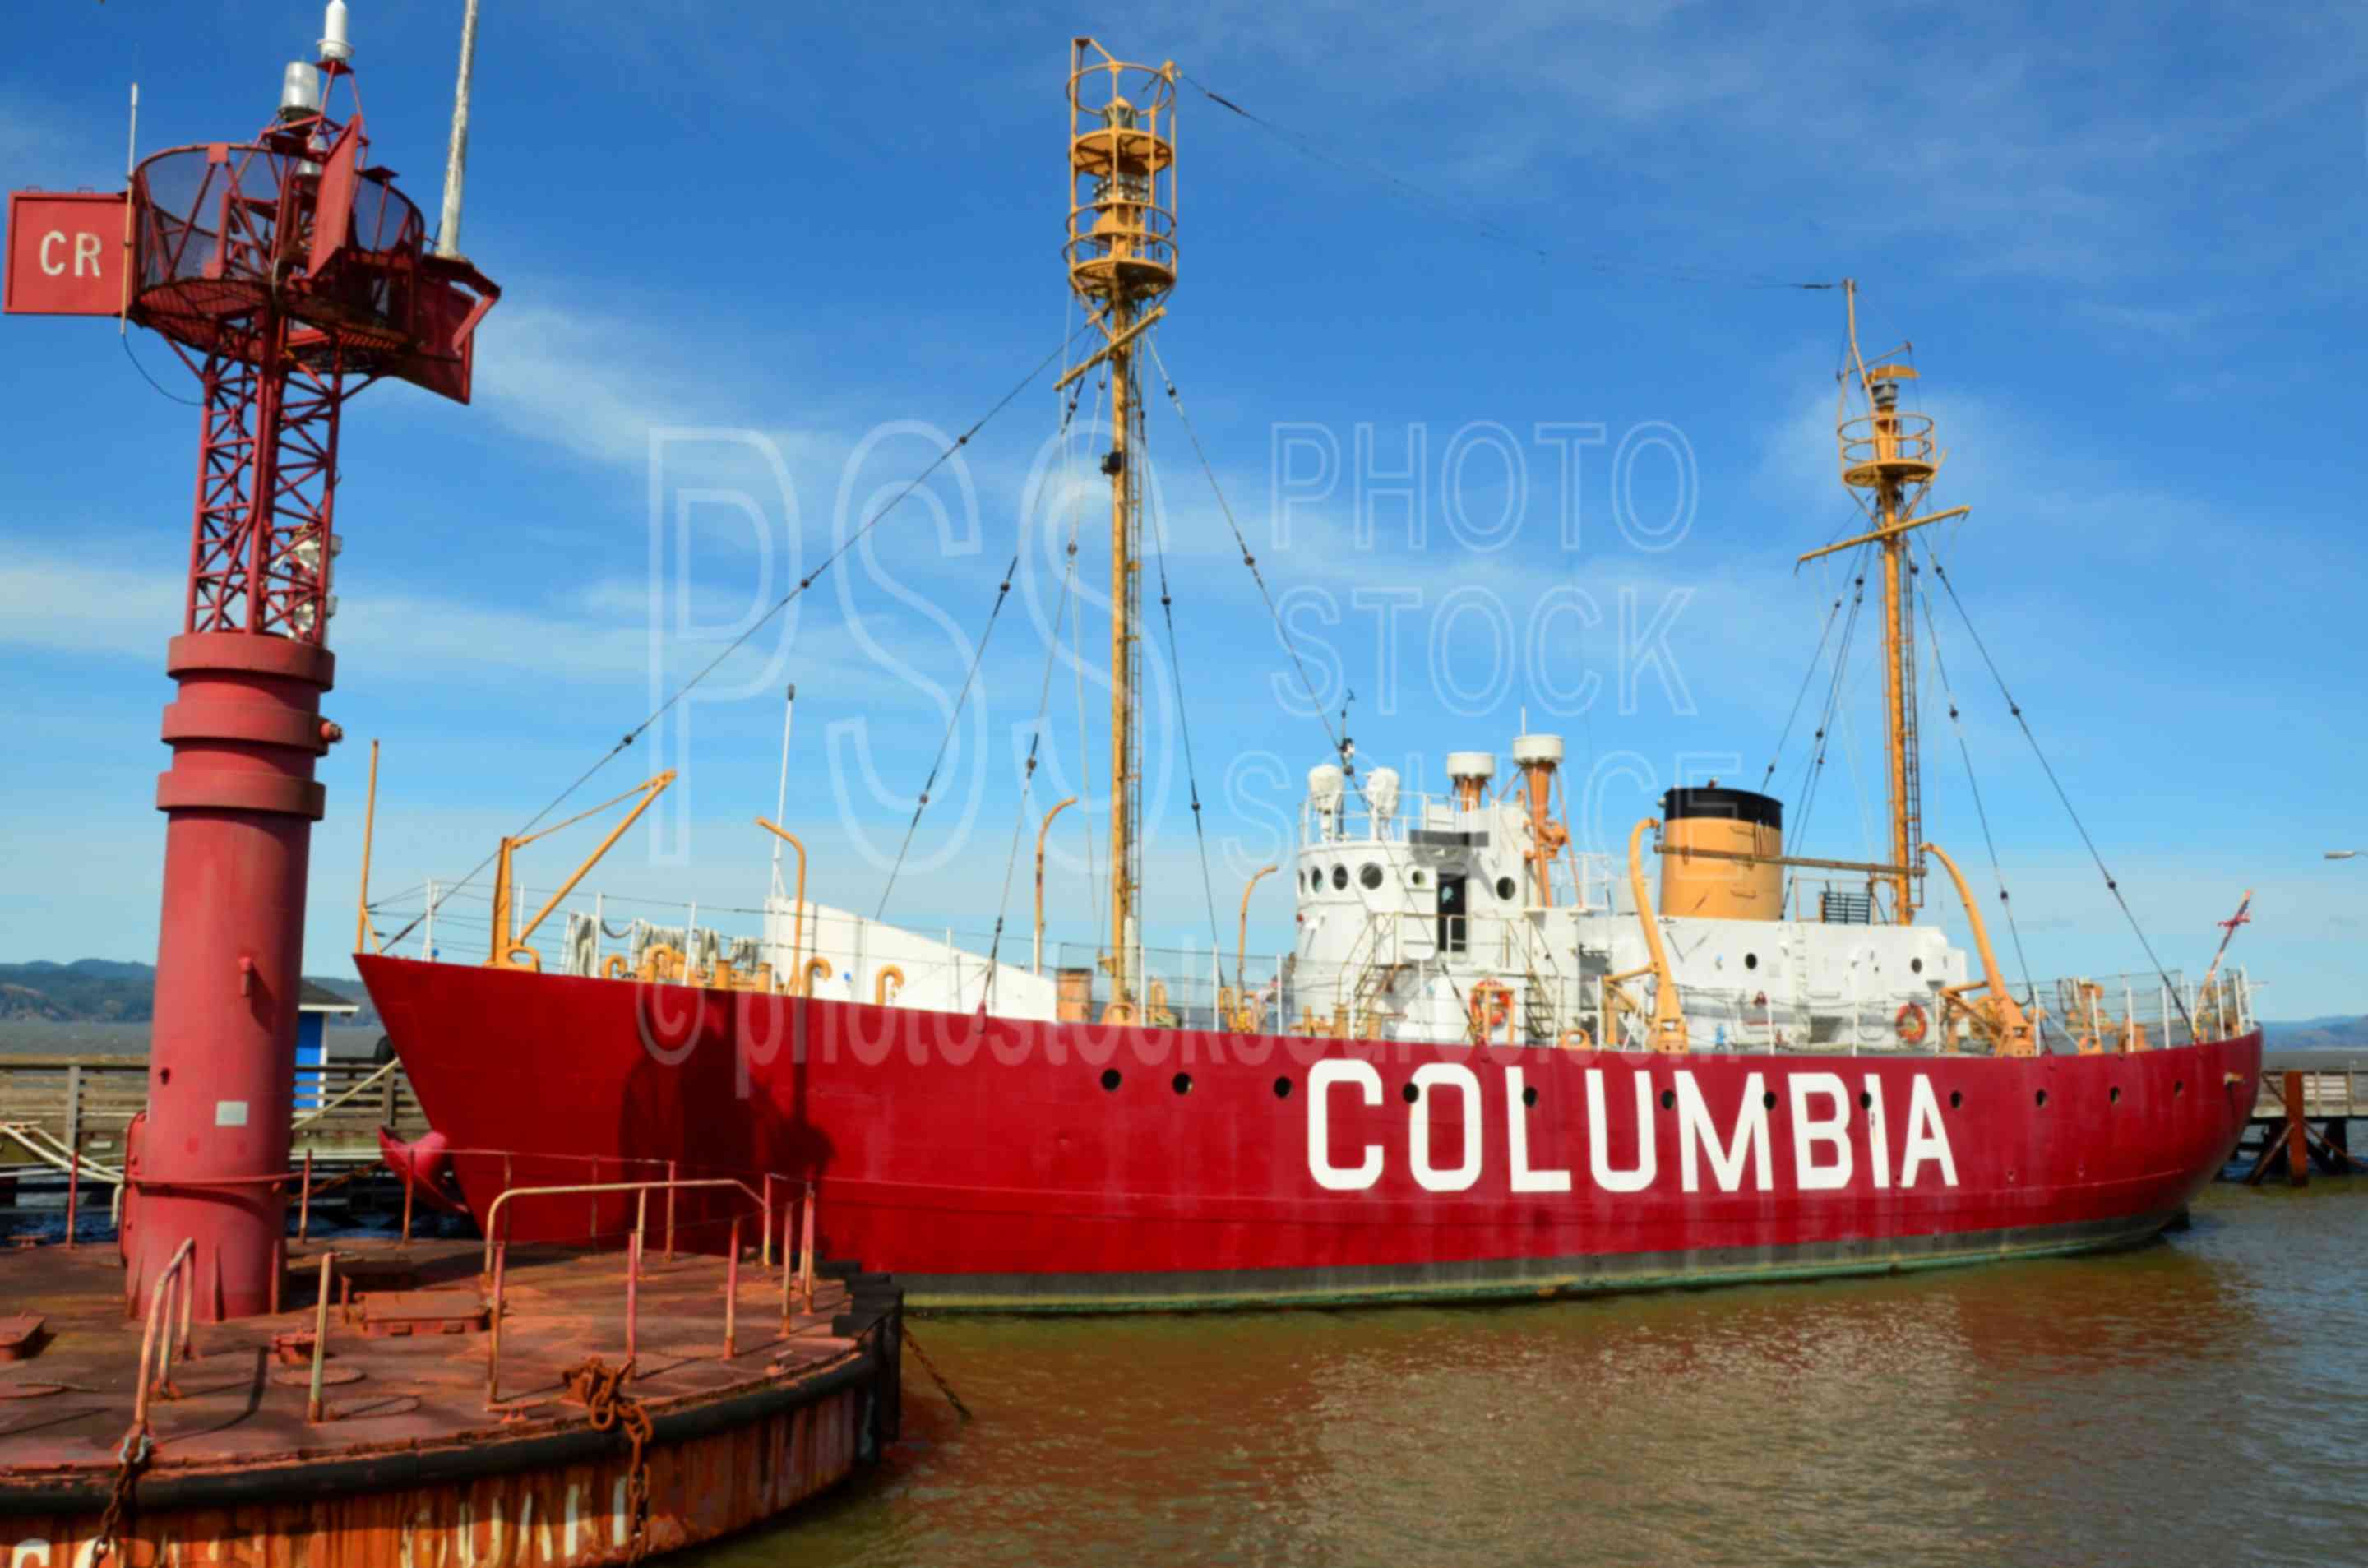 Lightship Columbia,lightship,light,navigation,maritime